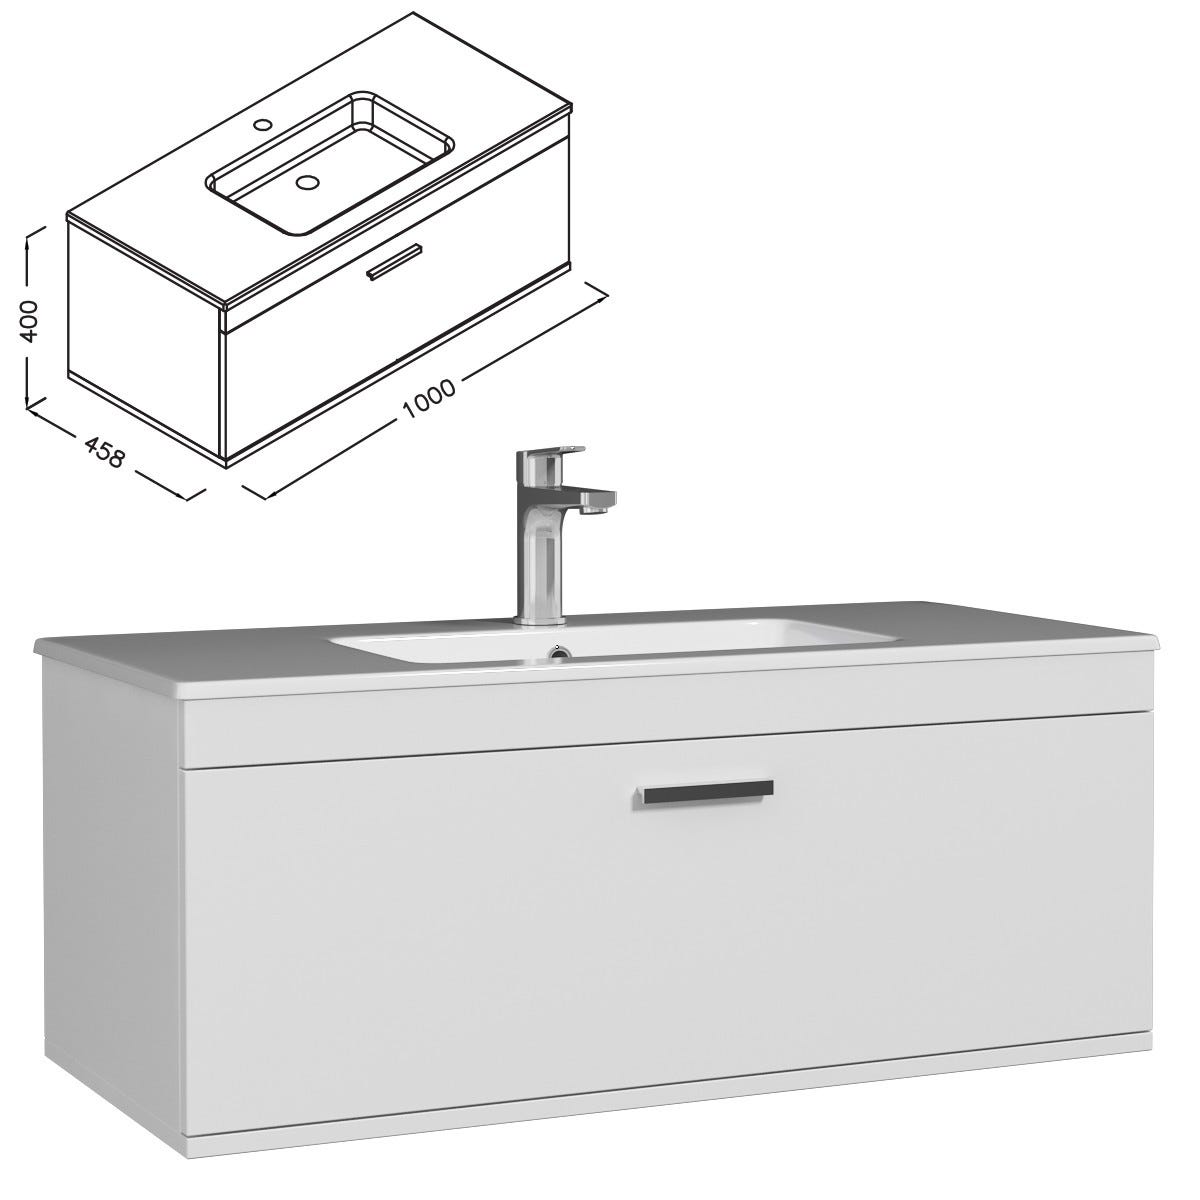 RUBITE Meuble salle de bain simple vasque 1 tiroir blanc largeur 100 cm 2